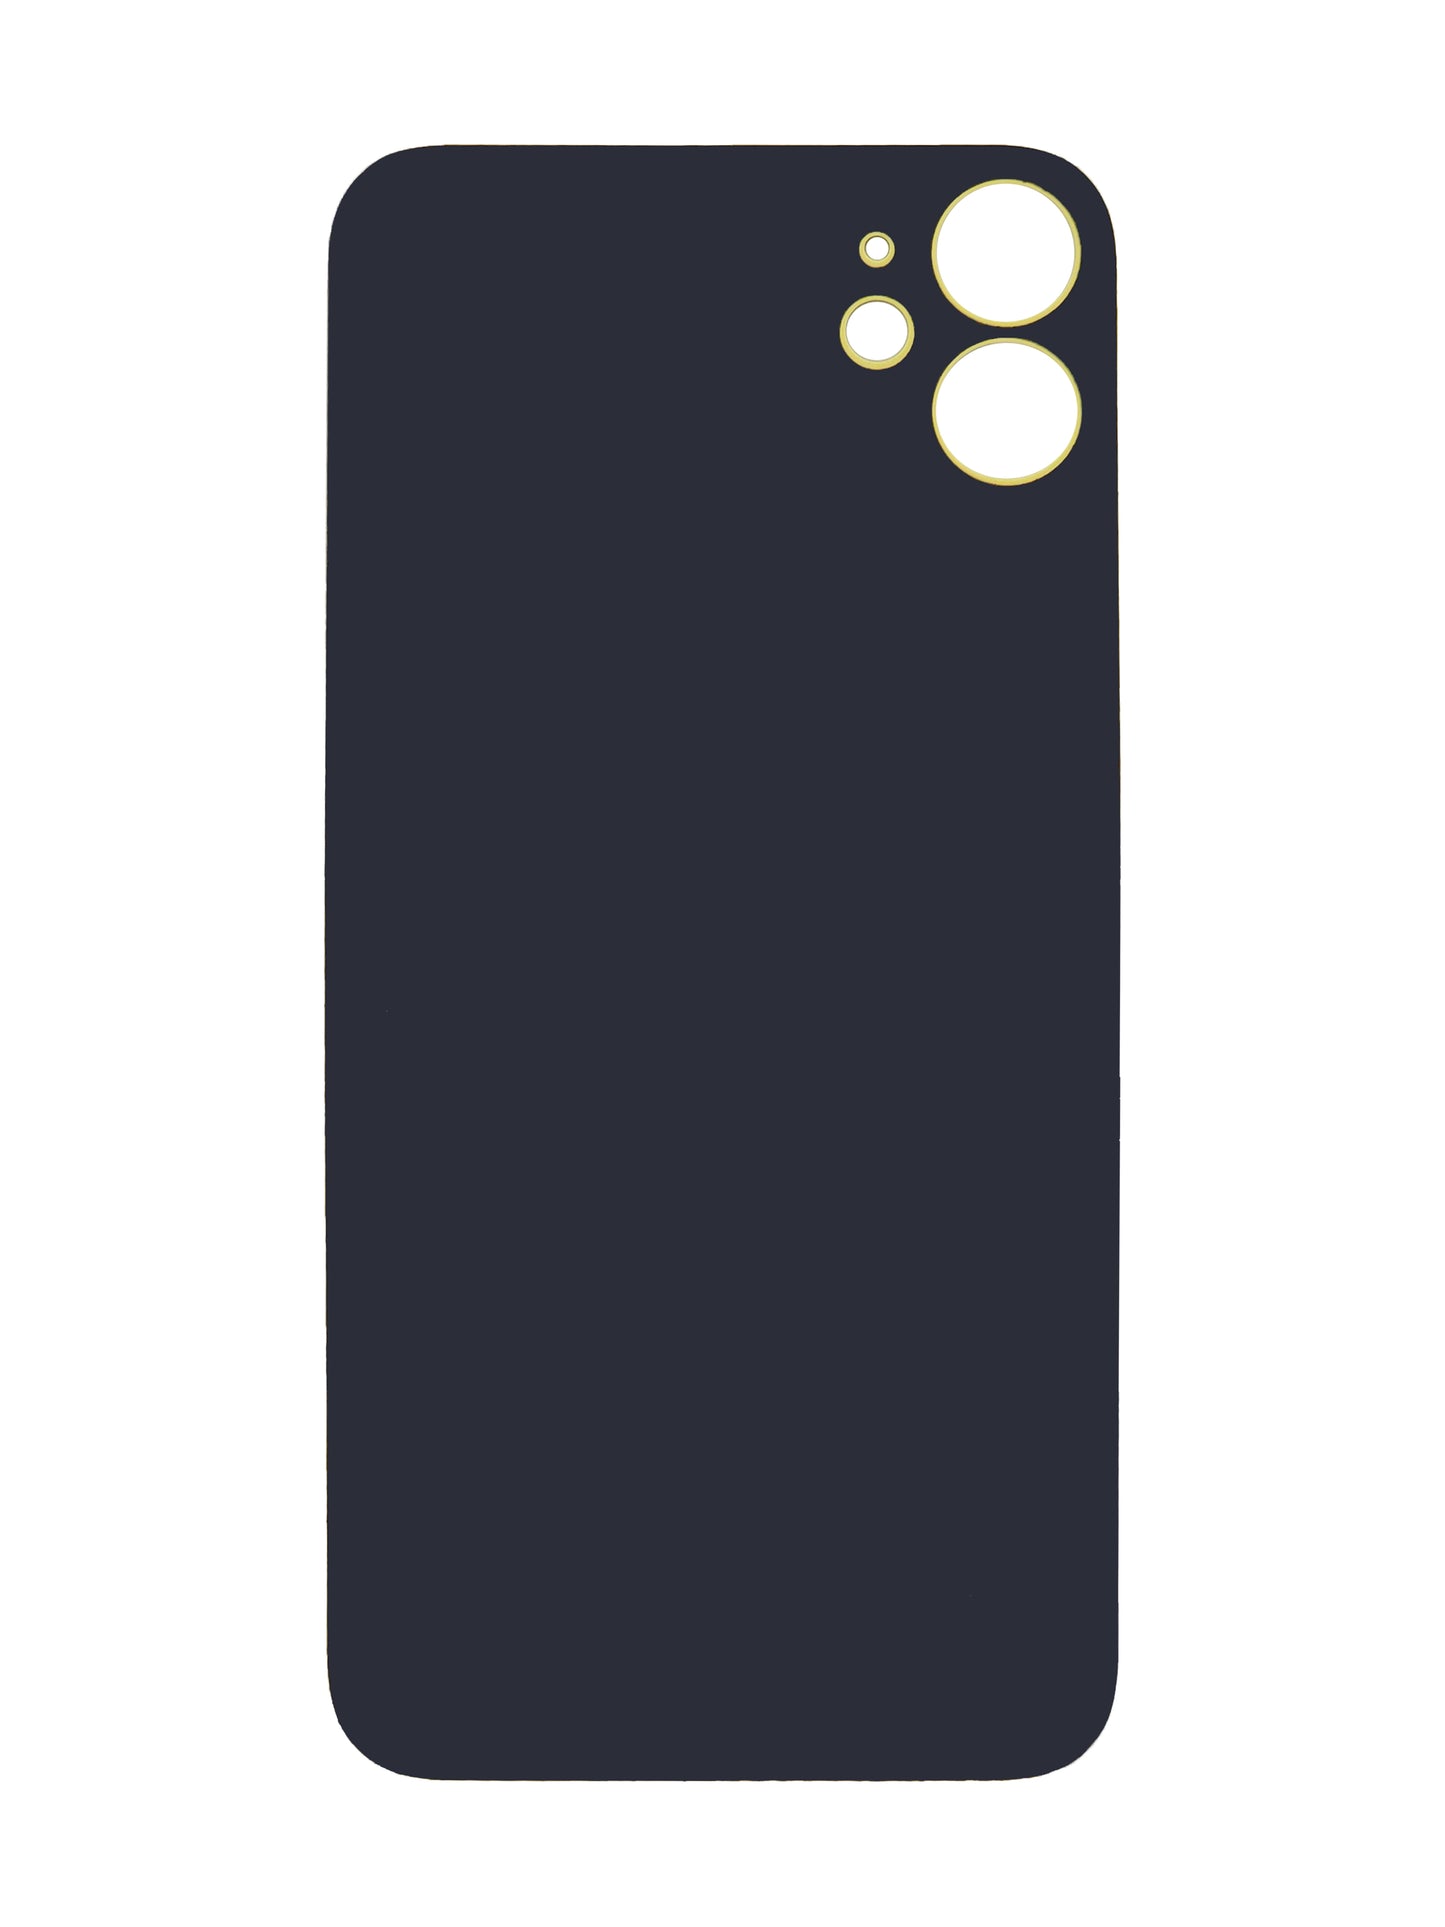 iPhone 11 Back Glass (No Logo) (Yellow)